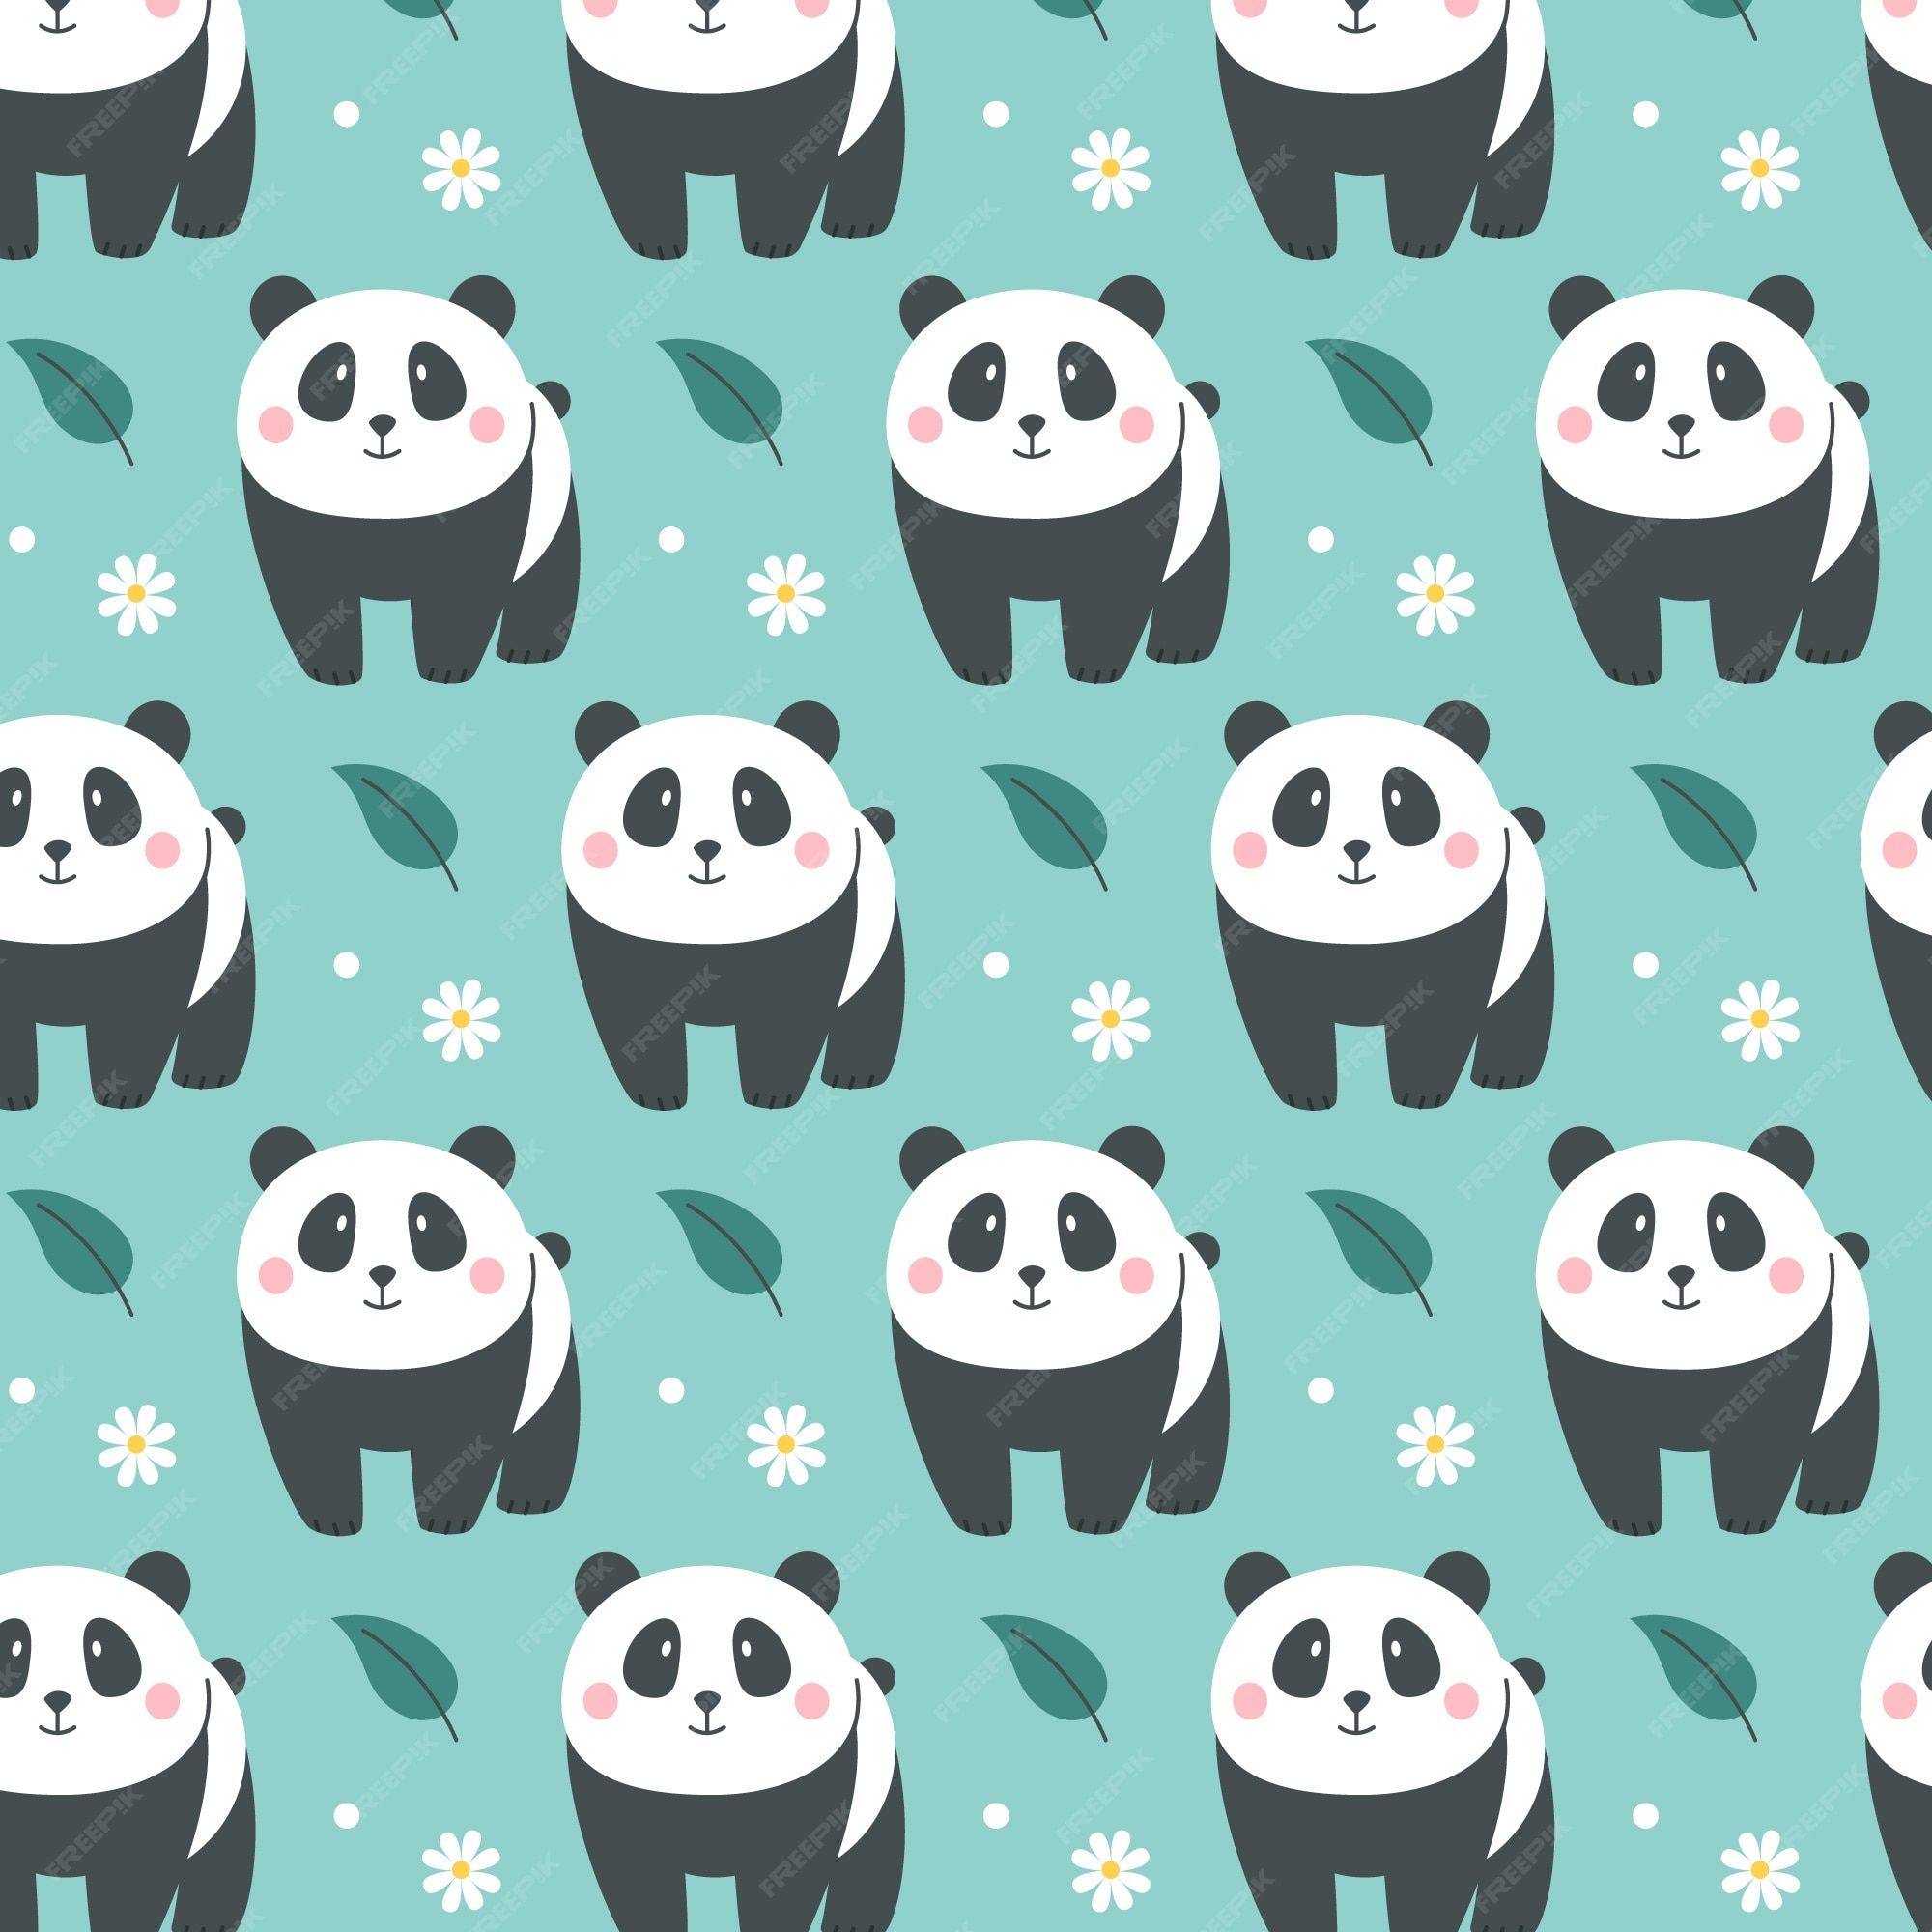 Cute panda wallpaper Vectors & Illustrations for Free Download